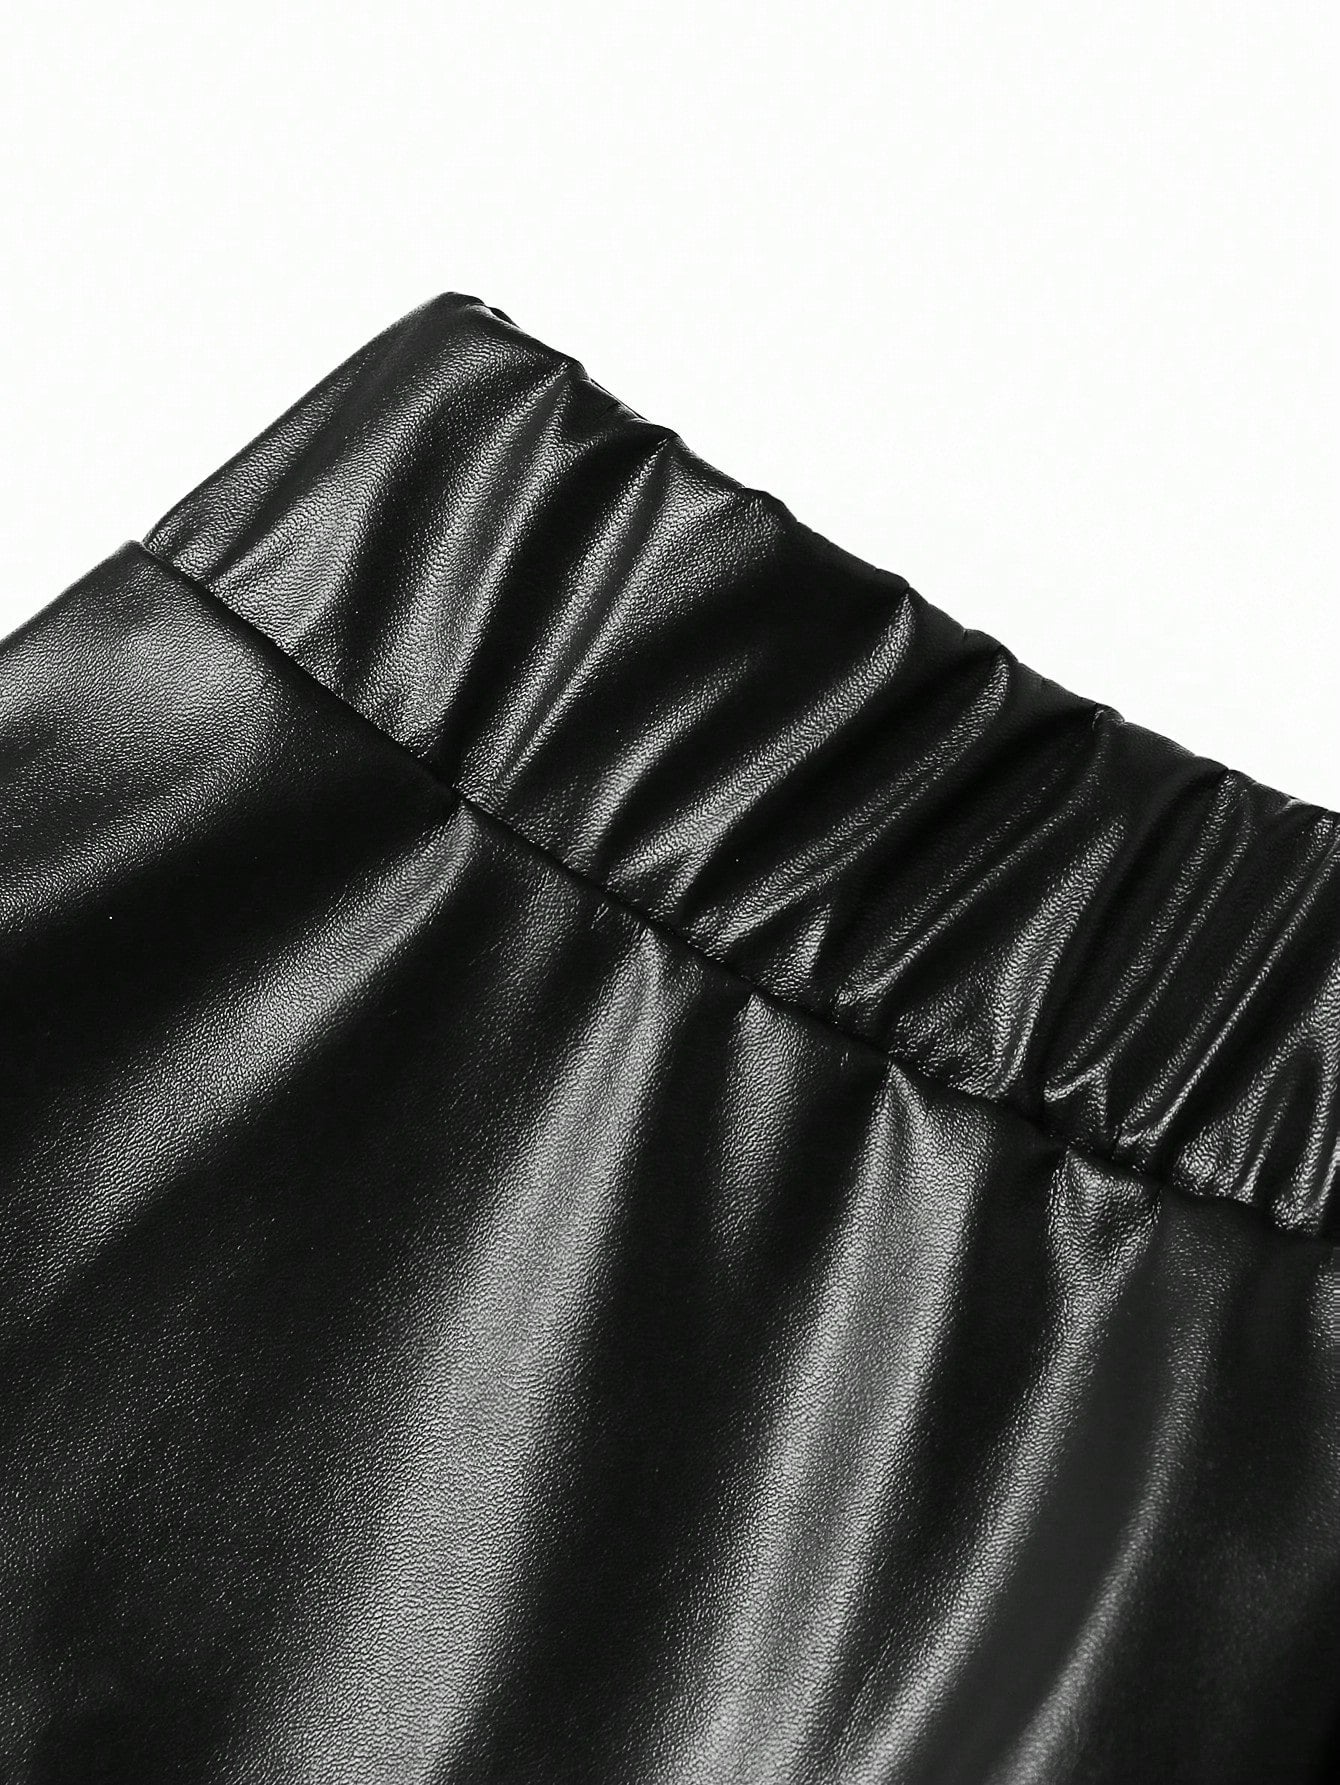 Addams Plus Laser Cut Scallop Trim PU Leather Flare Skirt